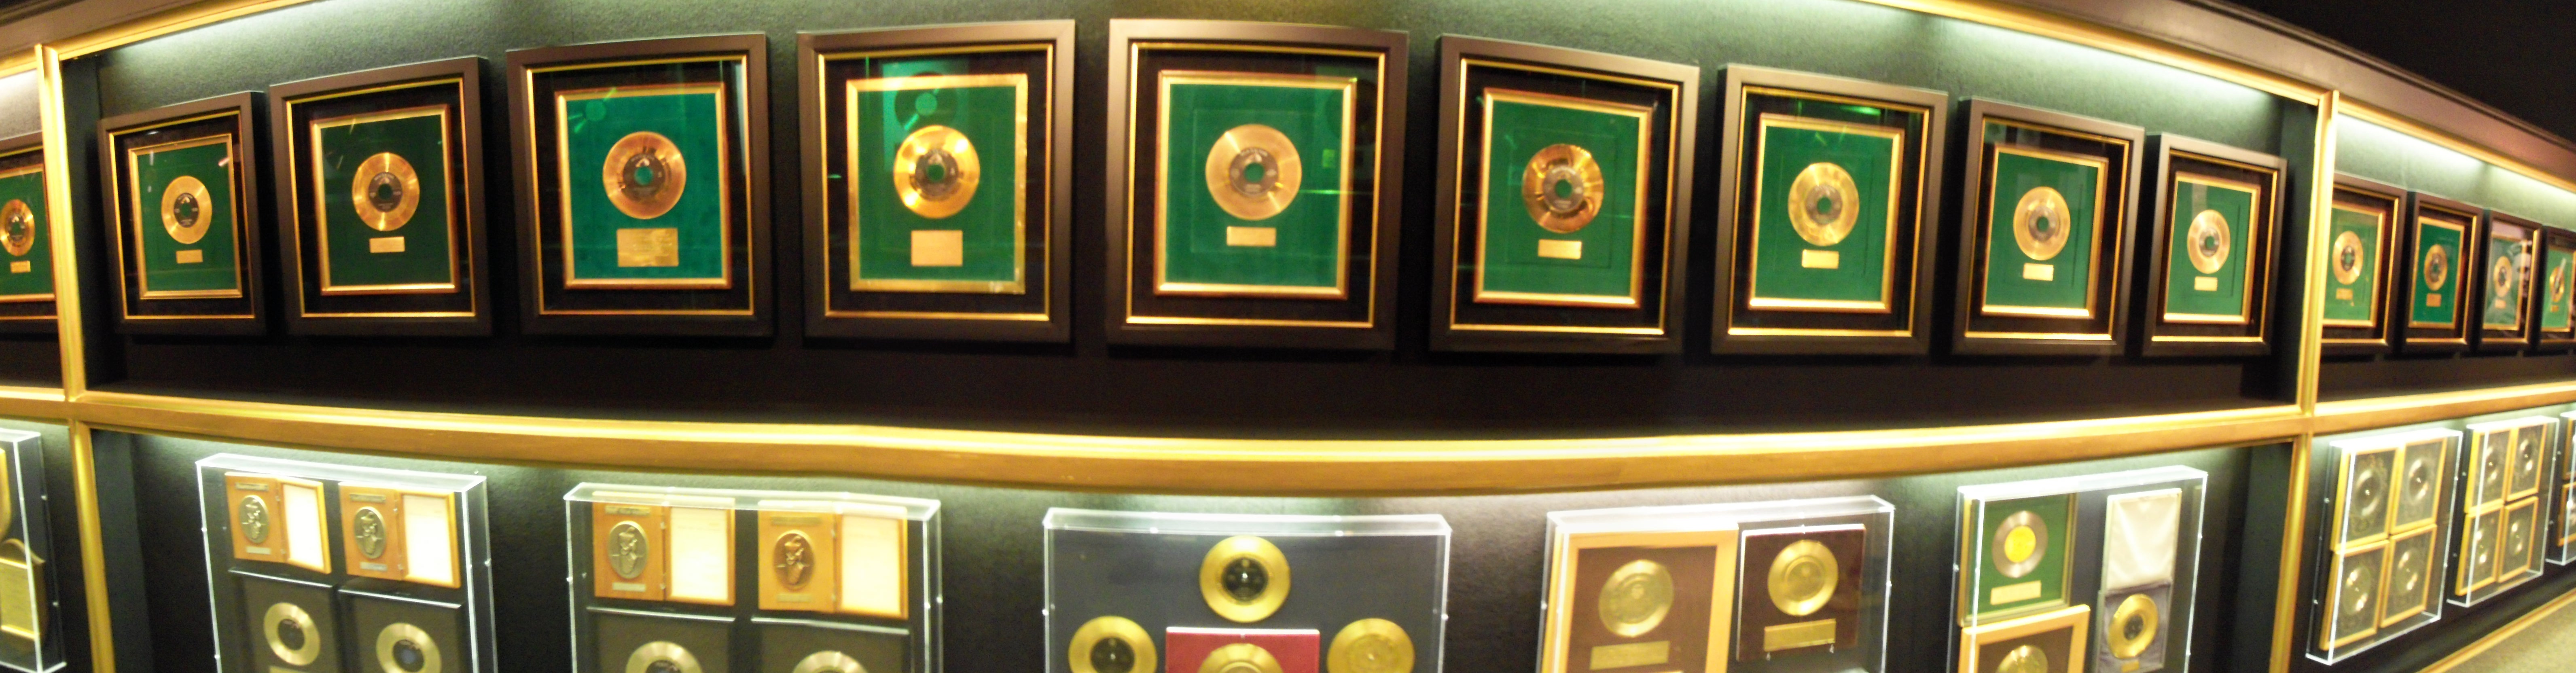 graceland-elvis-gold-records-pana